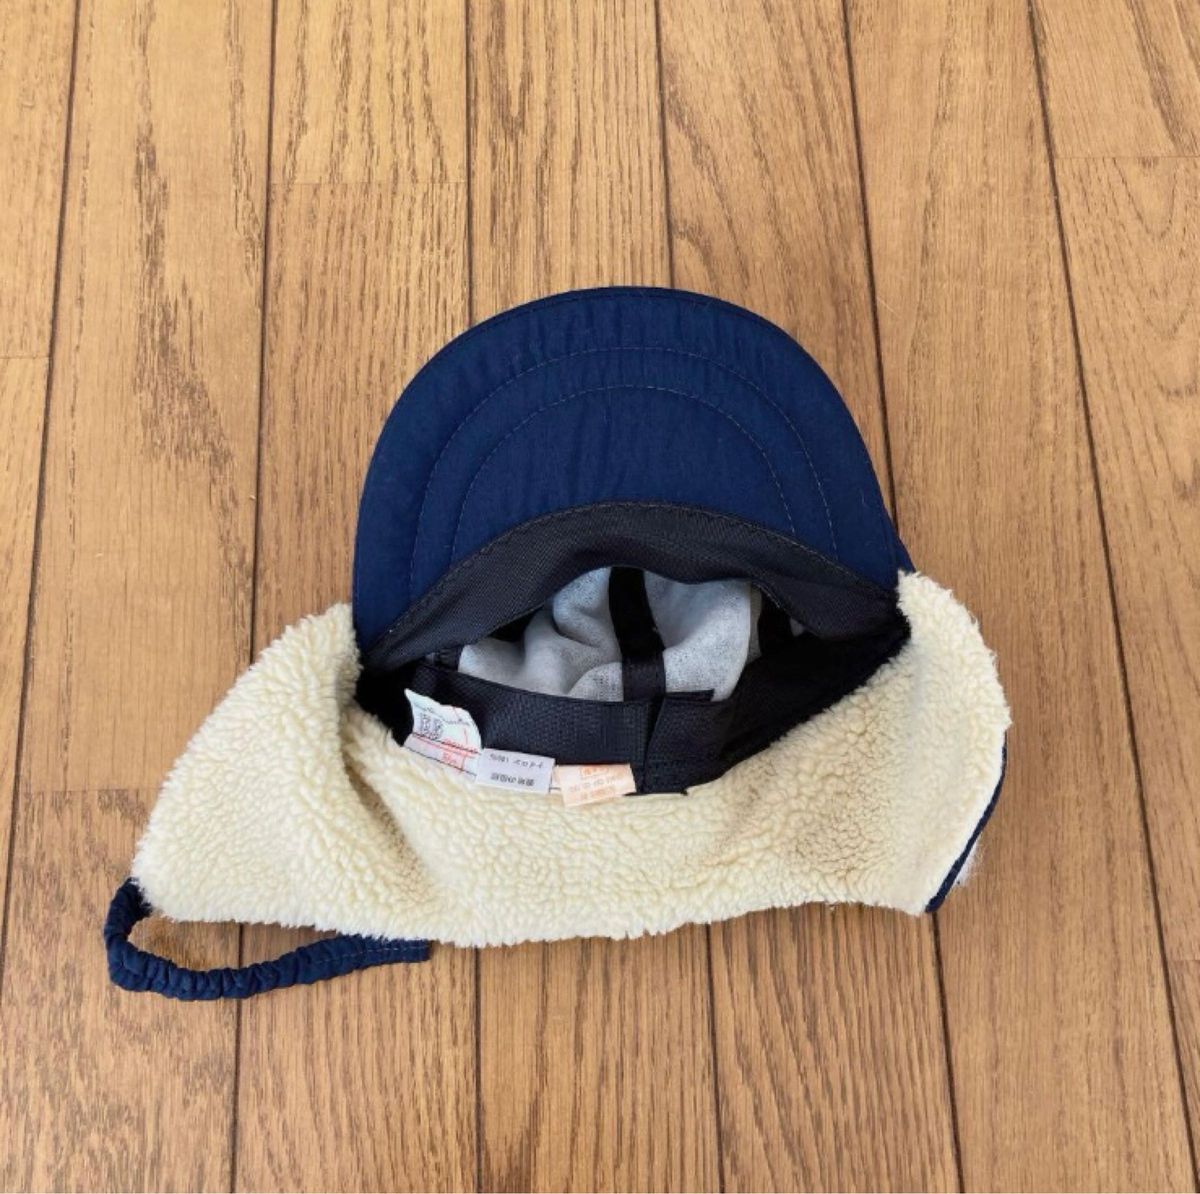 CROSS CAP tokyo ミッキー　マウス　キッズ　帽子　ギャップ　ヴィンテージ　ビンテージ